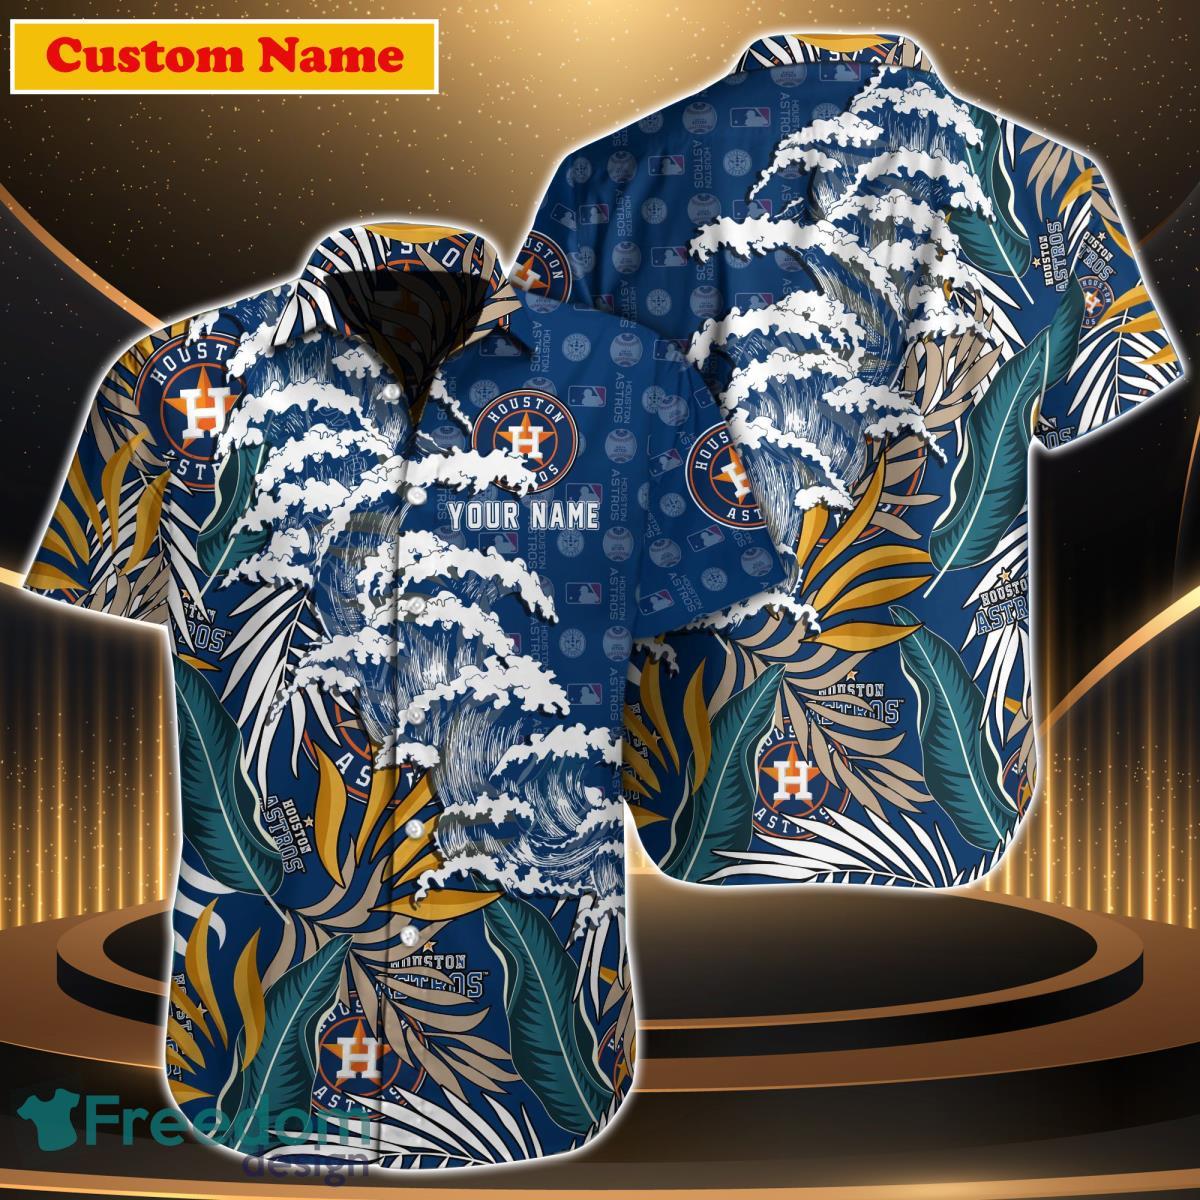 Houston Astros Baseball Jersey All Over Hawaiian Shirt And Short Set -  Freedomdesign